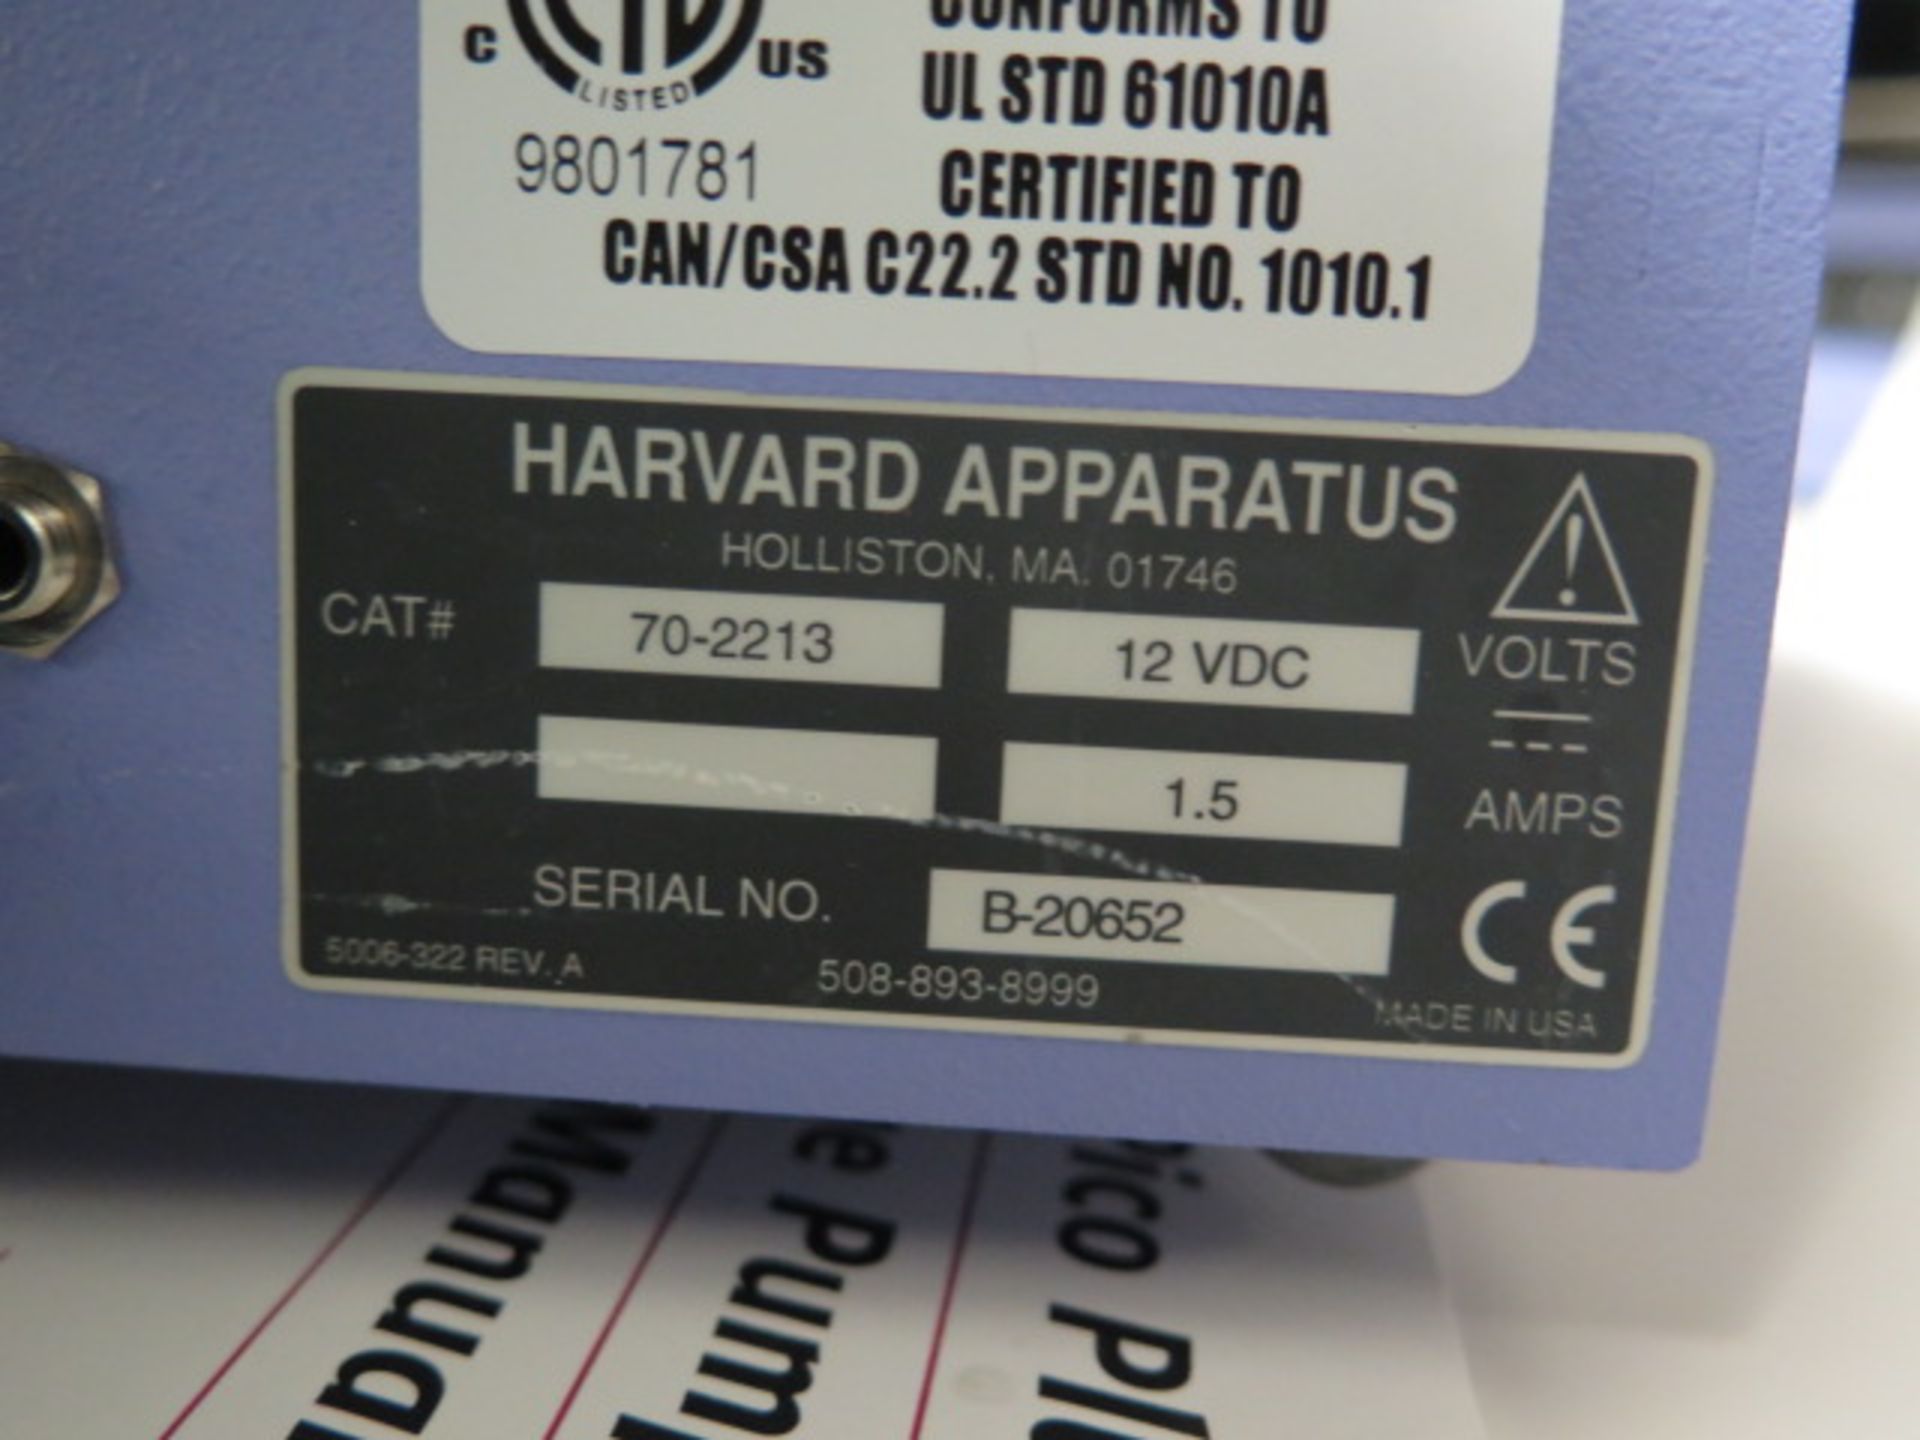 Harvard "Pico Plus" mdl. 70-2213 Syringe Pump (SOLD AS-IS - NO WARRANTY) - Image 5 of 5